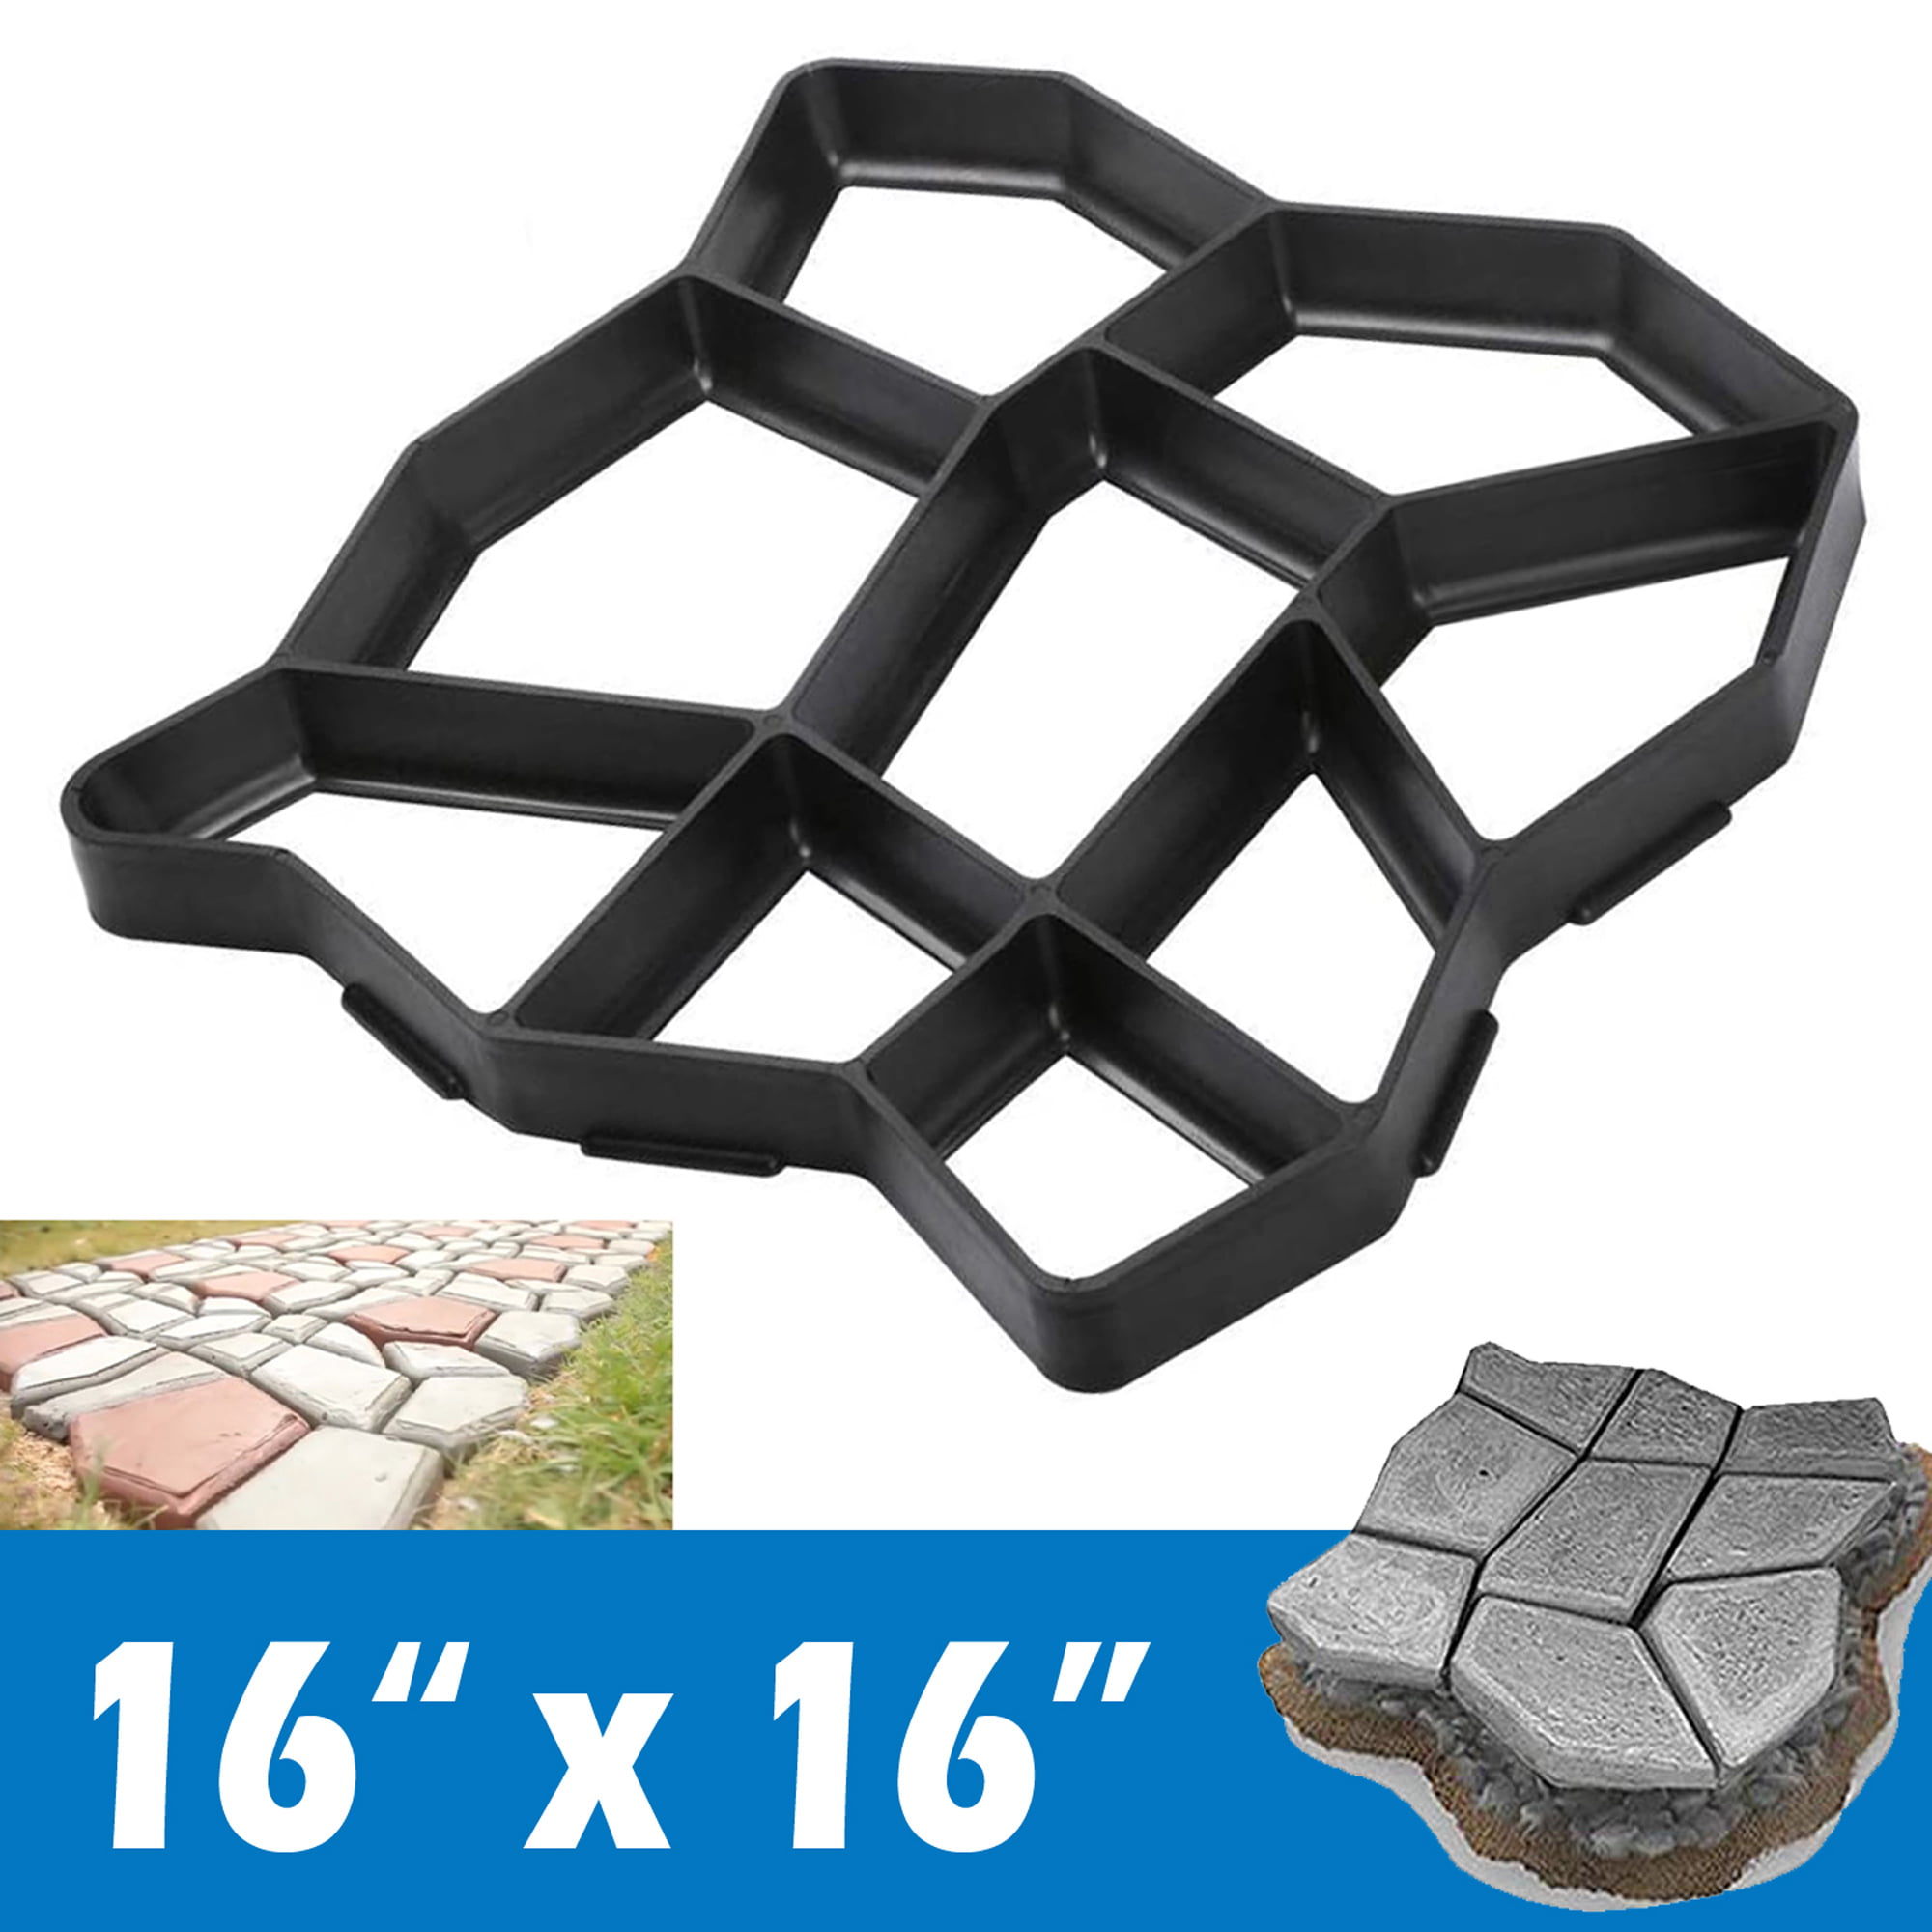 IMAGE 16"x16" Concrete Mold Road DIY Mold Walk Maker, Reusable Concrete